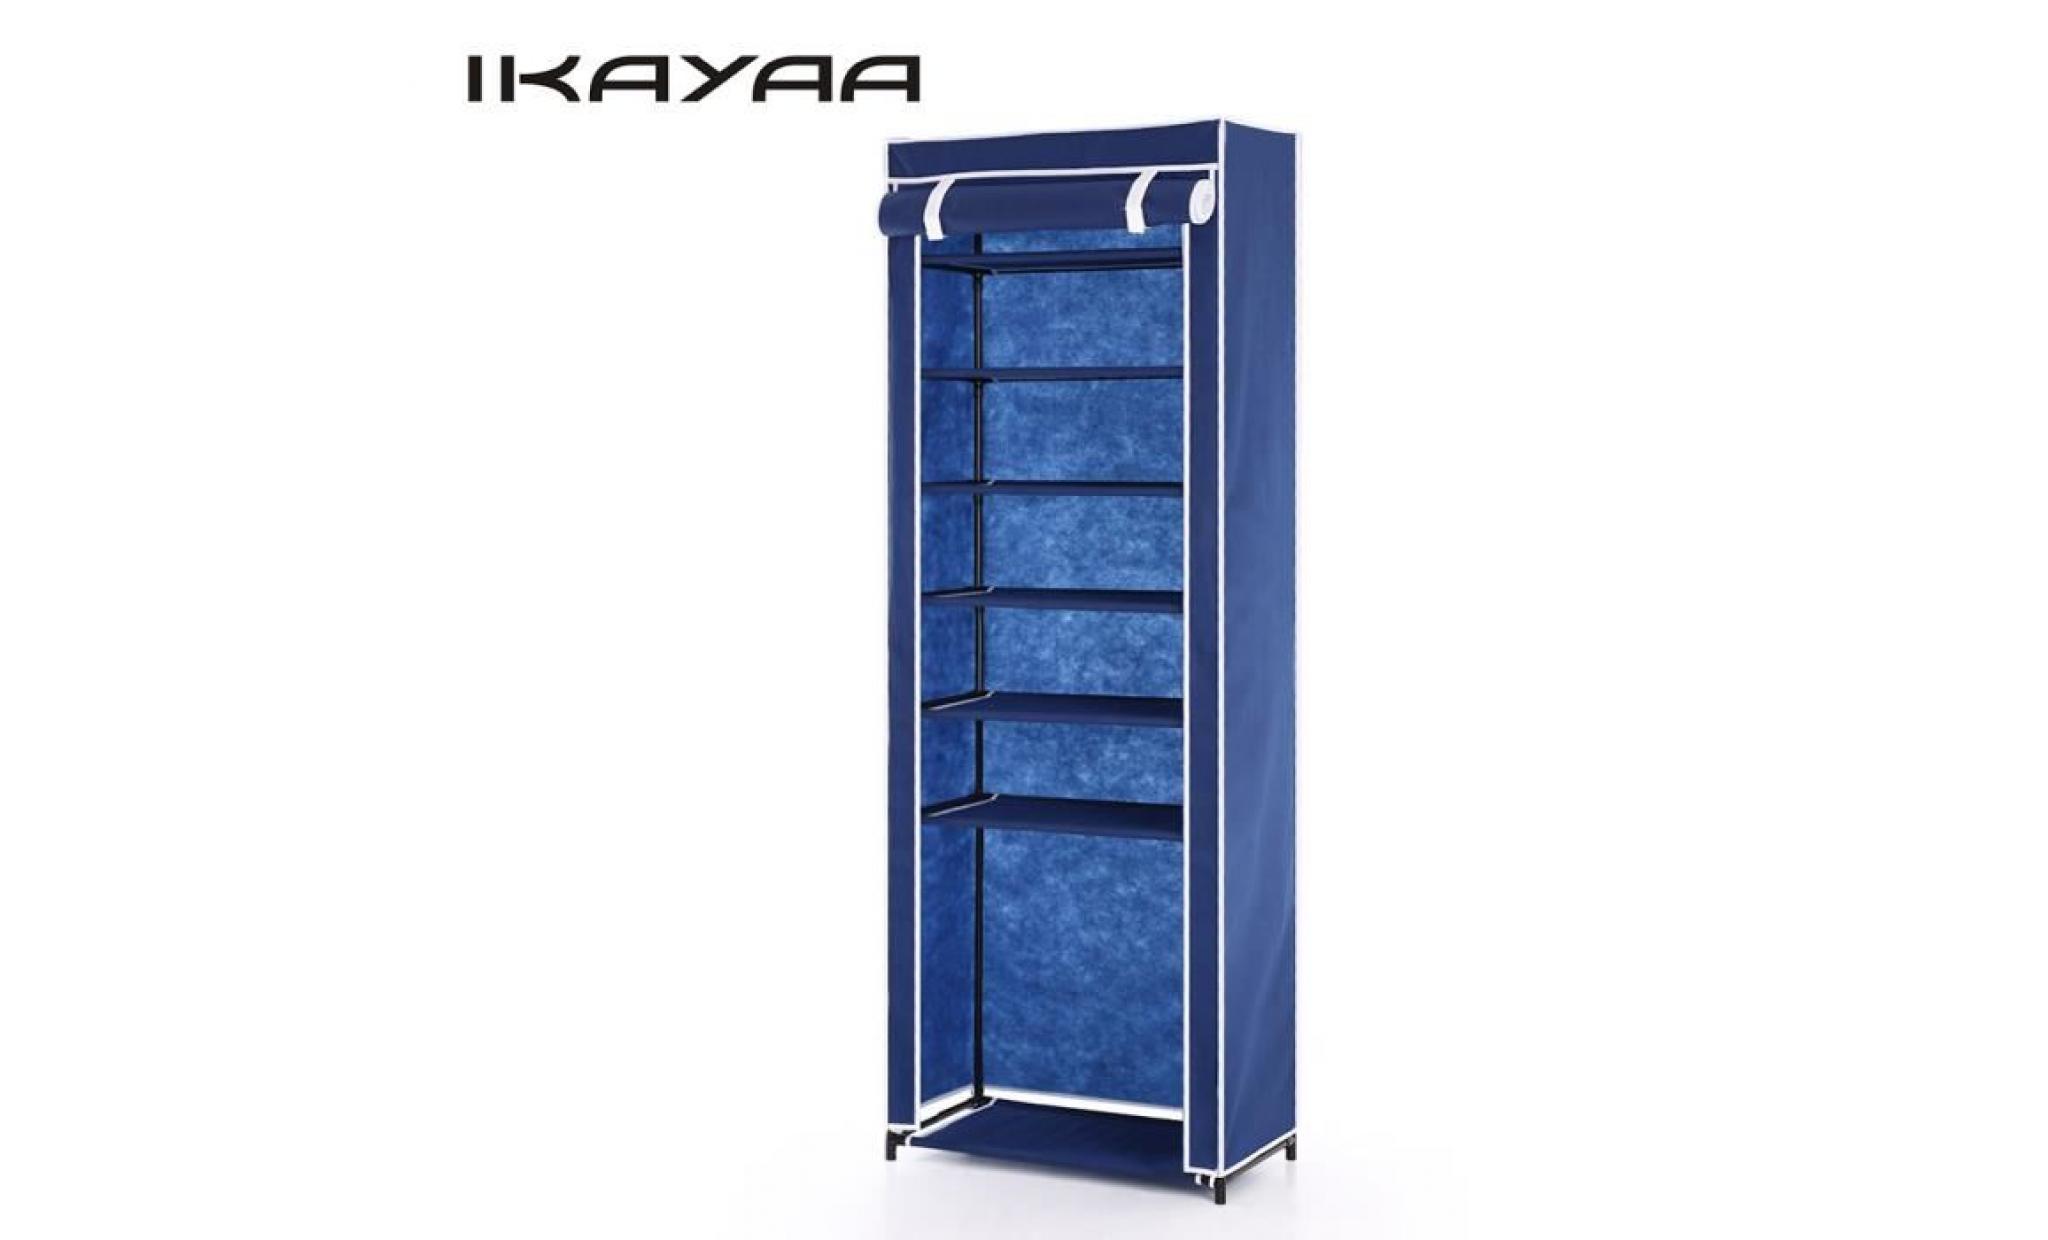 ikayaa meuble à chaussures bleu rangement organiser 7 étages design classique pratique grand espace pas cher